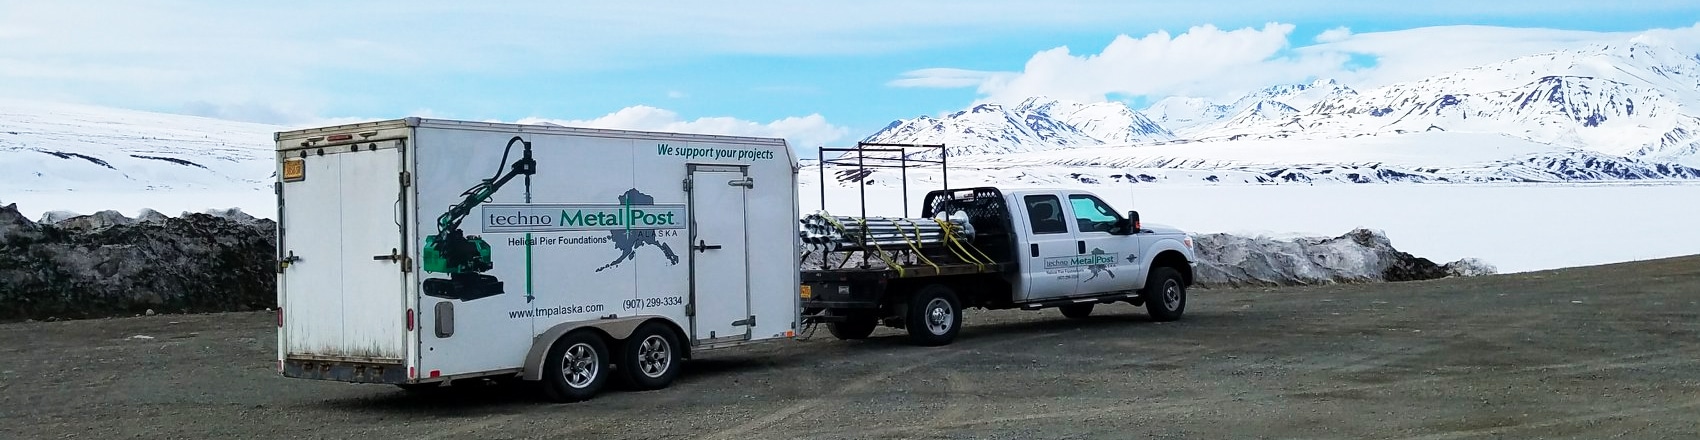 Techno Metal Post truck hauling trailer with equipment through snowy Alaskan mountains.